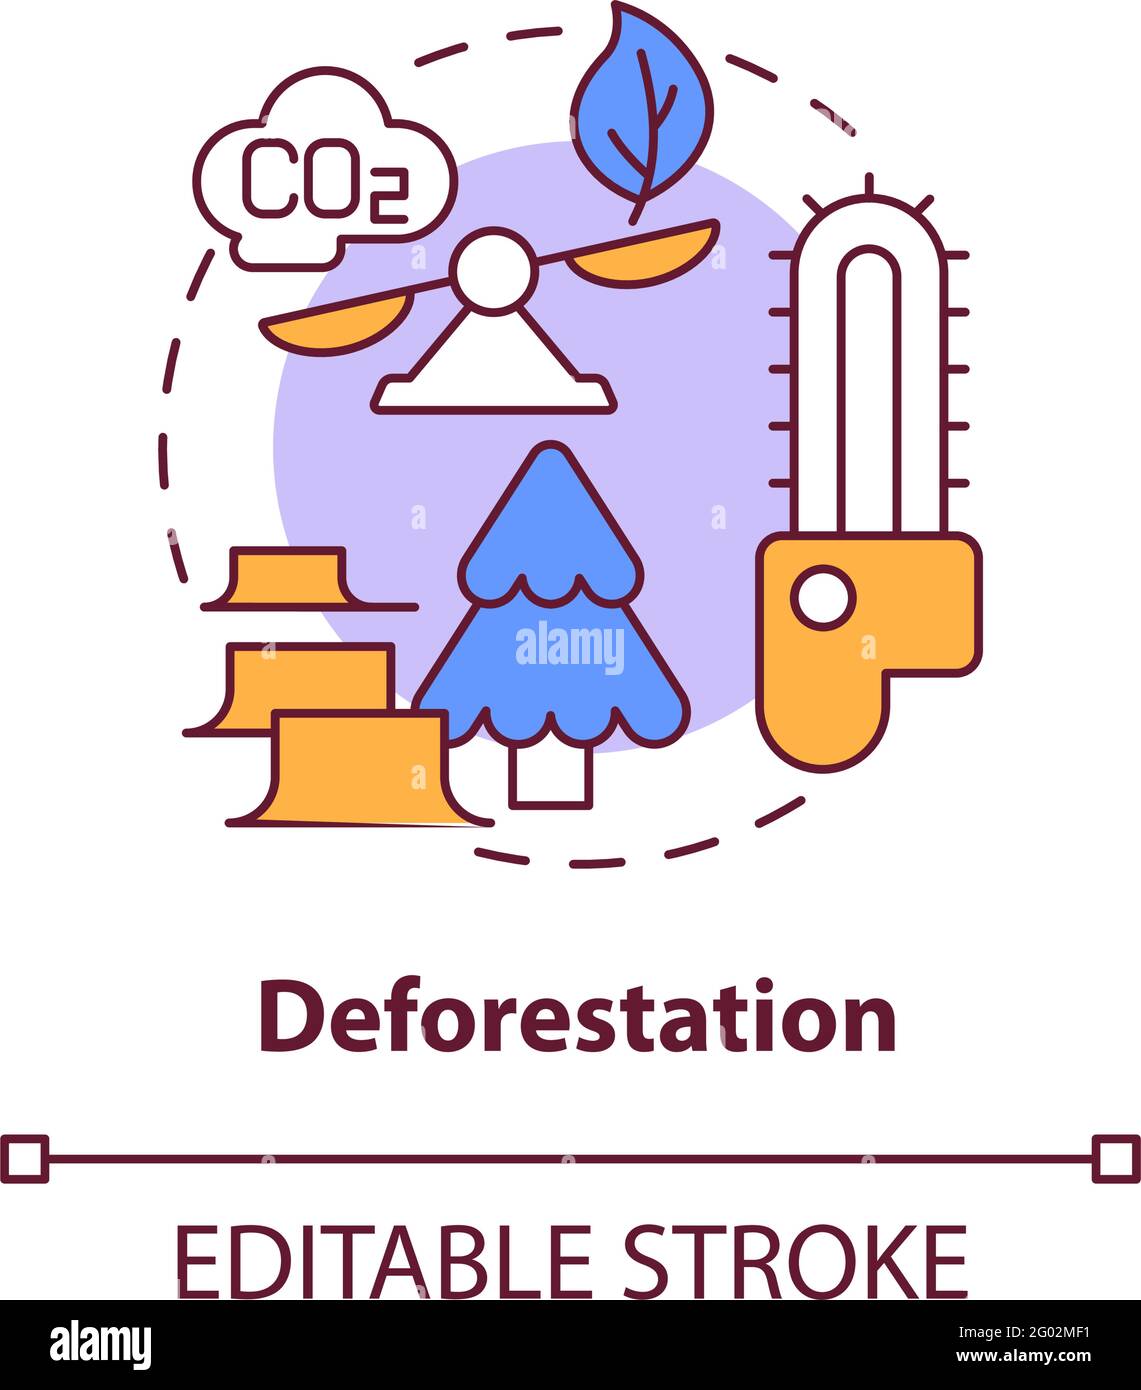 Deforestation concept icon Stock Vector